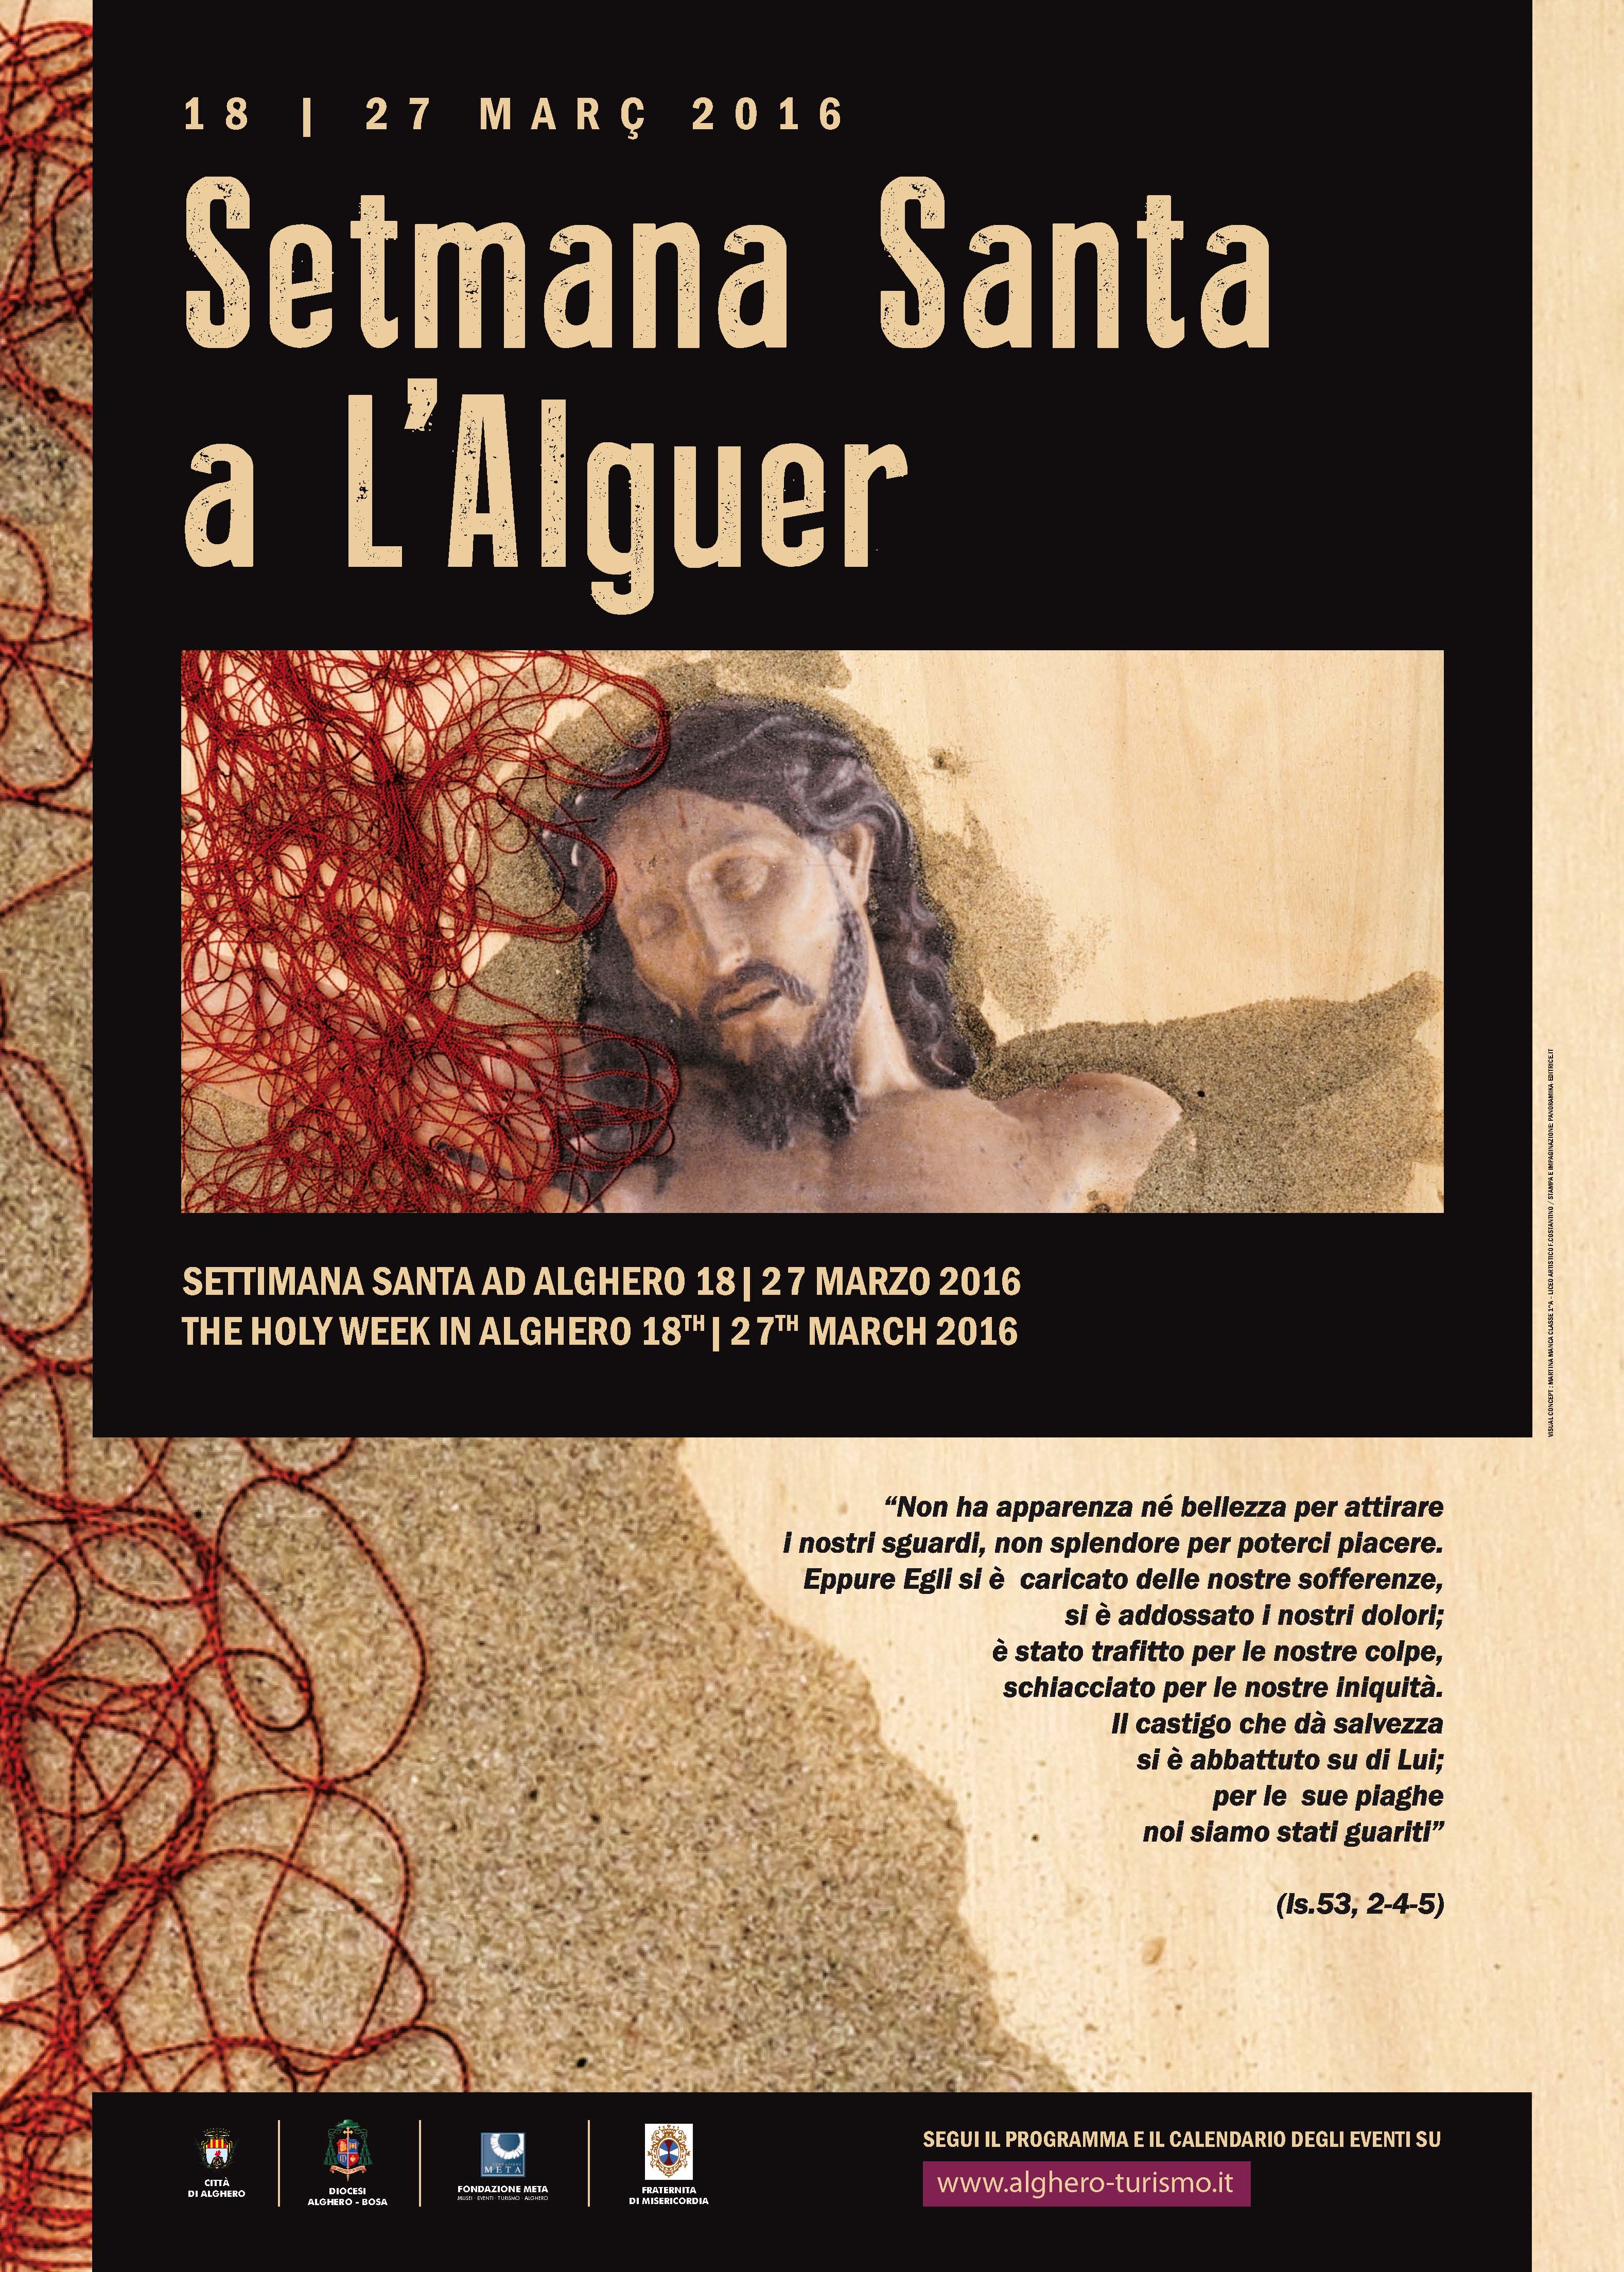 Dal 18 al 27 Marzo 2016 Setmana Santa a L'Alguer, Settimana Santa ad Alghero programma Evento